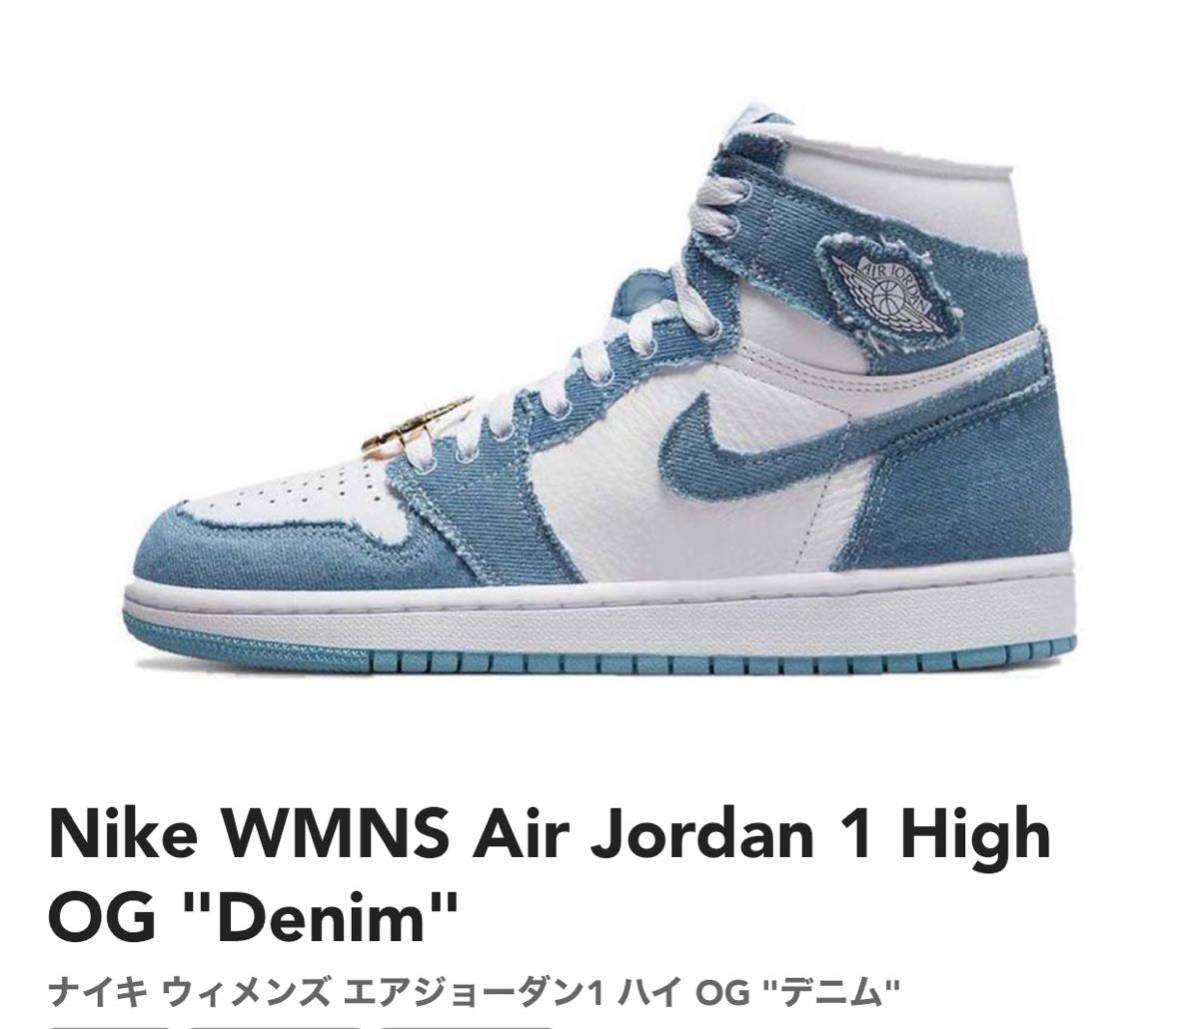 新品未使用品】NIKE WMNS Air Jordan 1 High OG Denim 23cm 即納